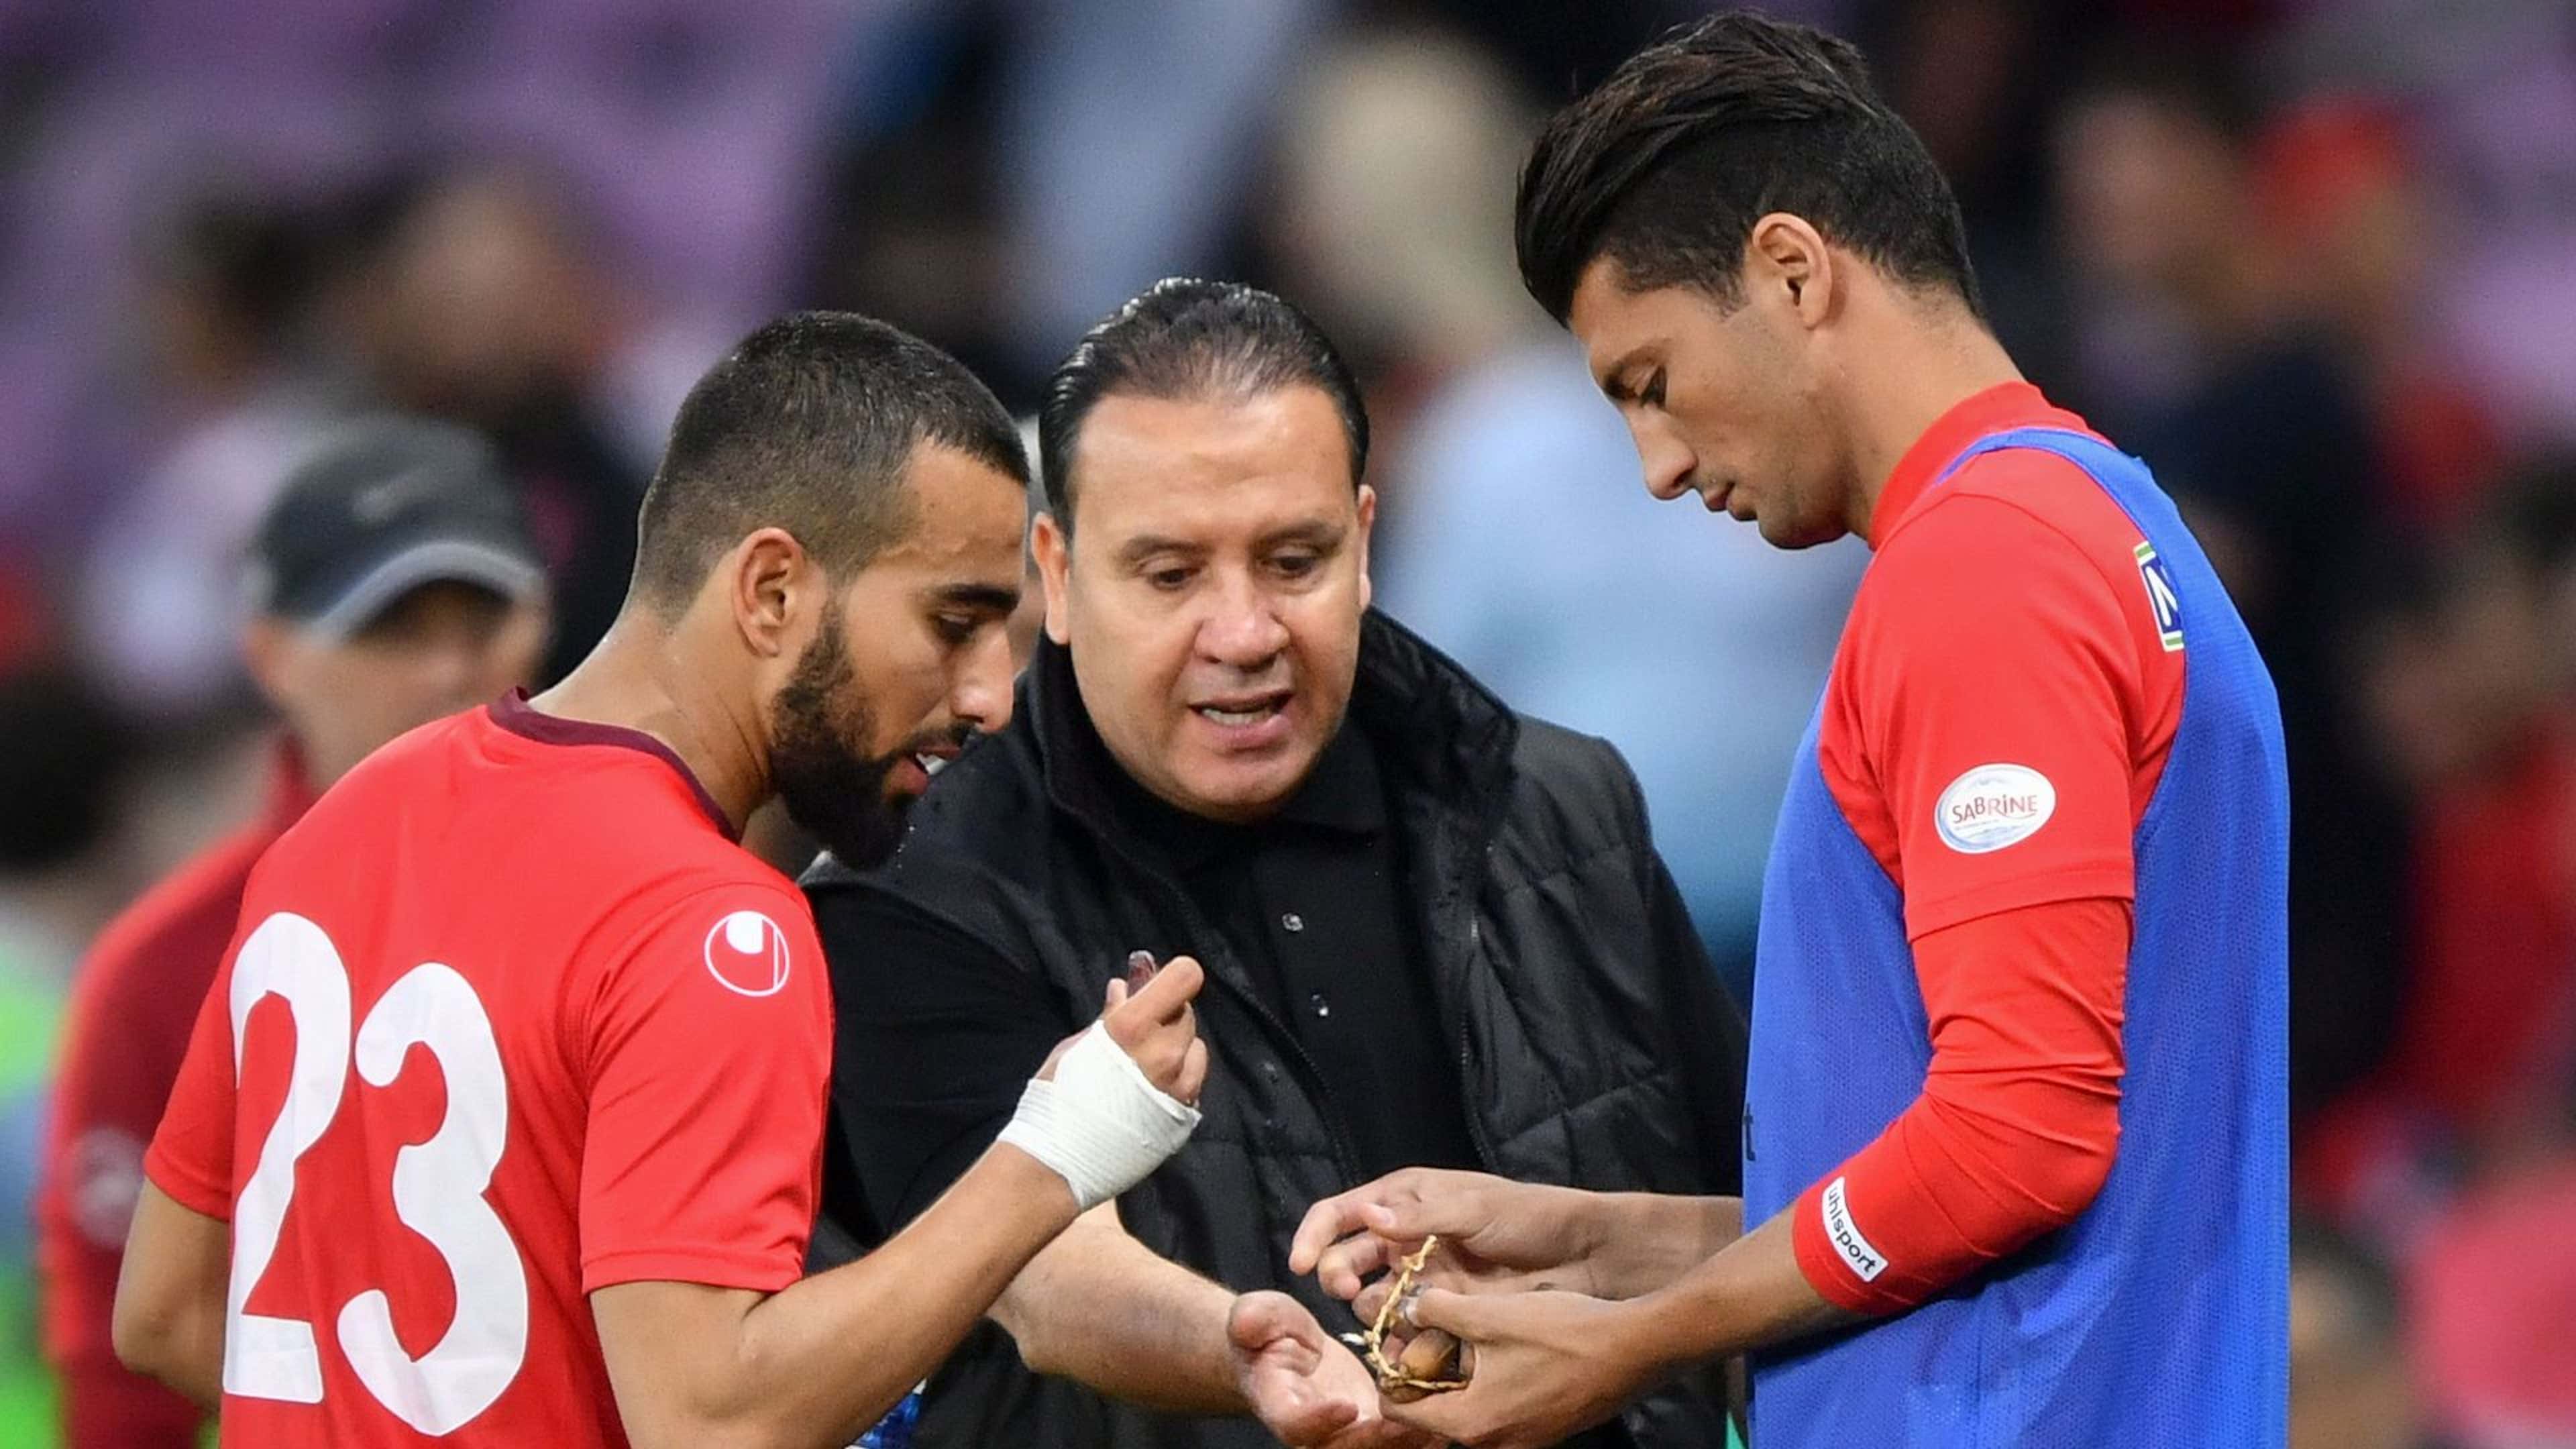 Tunisia's head coach Nabil Maaloul (C) distributes dates to Tunisia's midfielder Naim Sliti (L) and Tunisia's defender Rami Bedoui